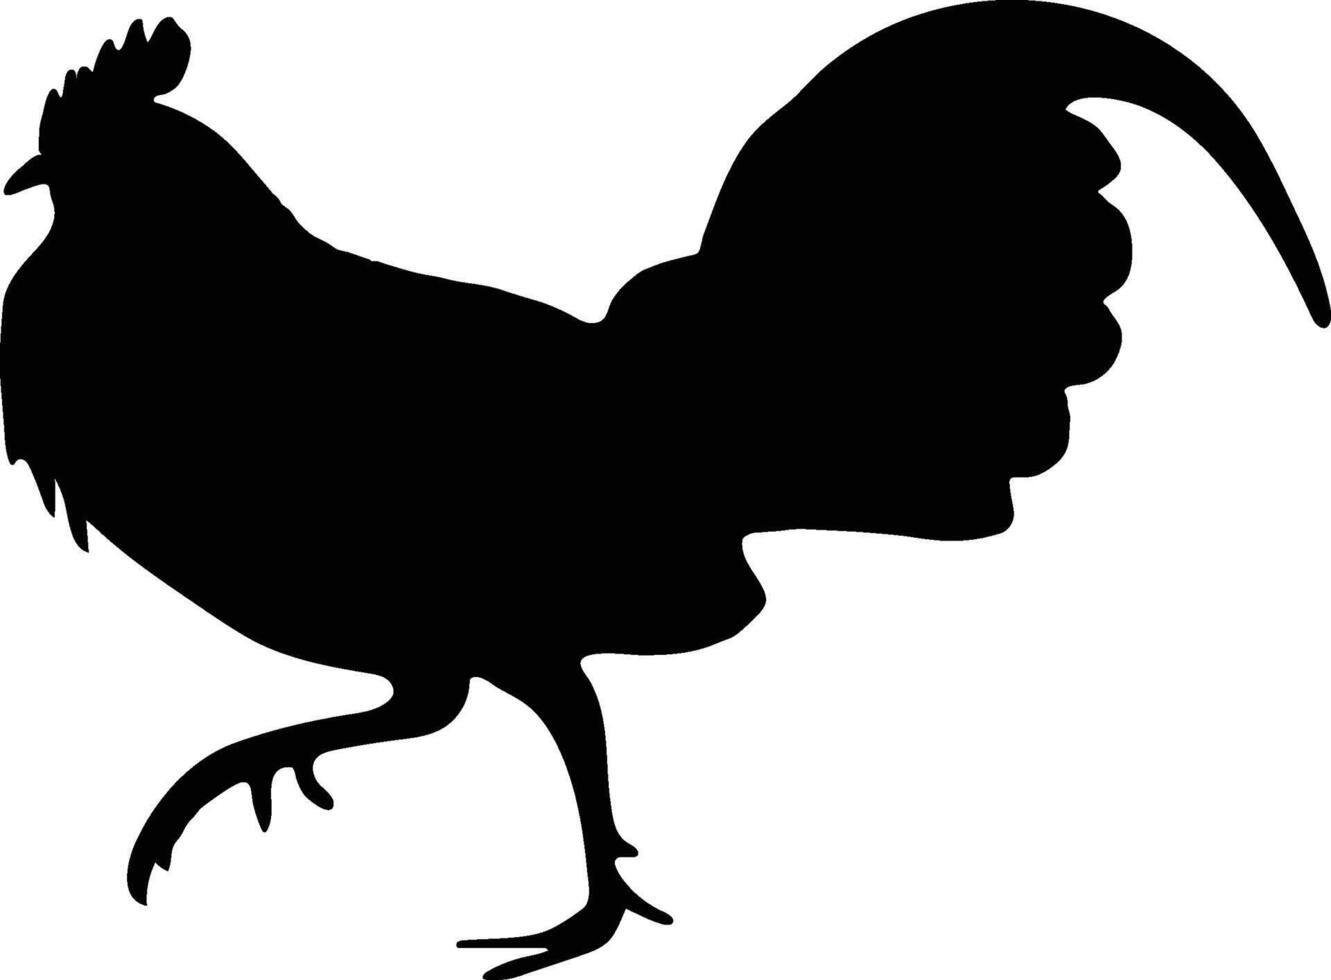 corriendo pollo gallo vector o silueta